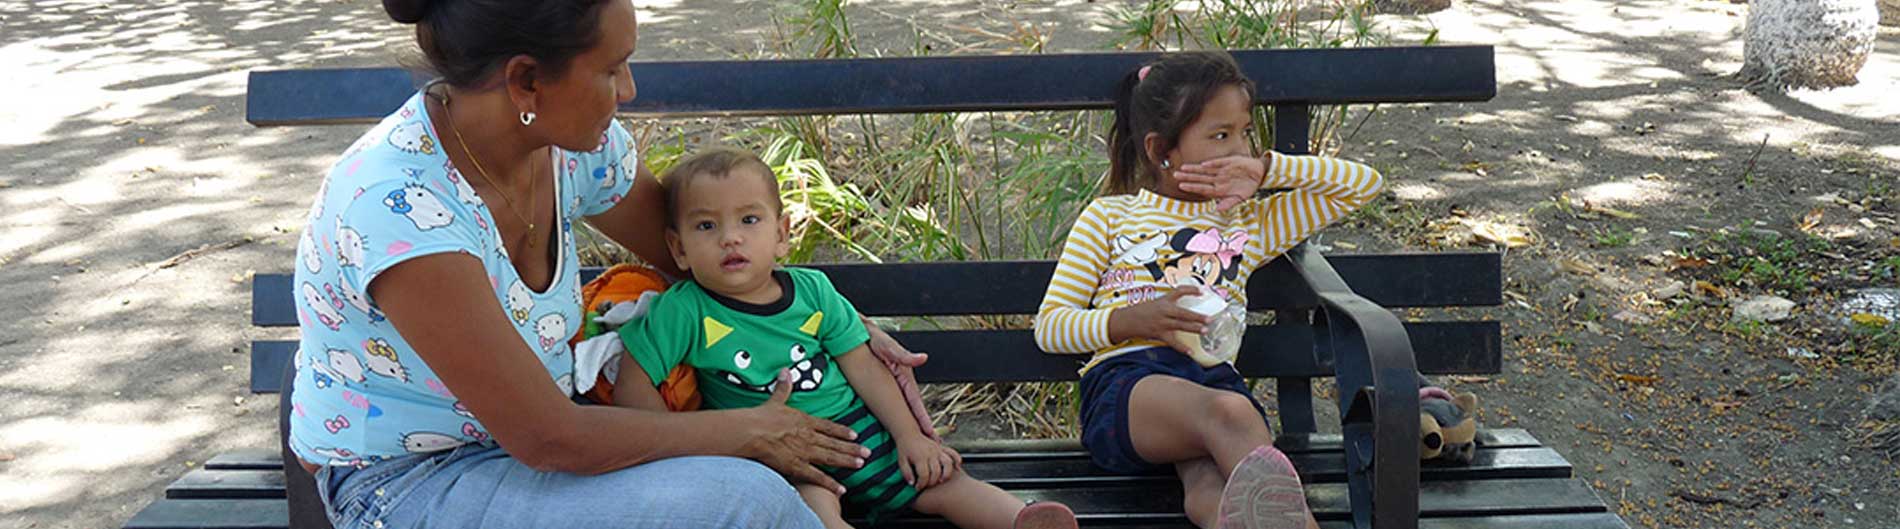 Venezuela desnutricin infancia campaa donacin CESAL